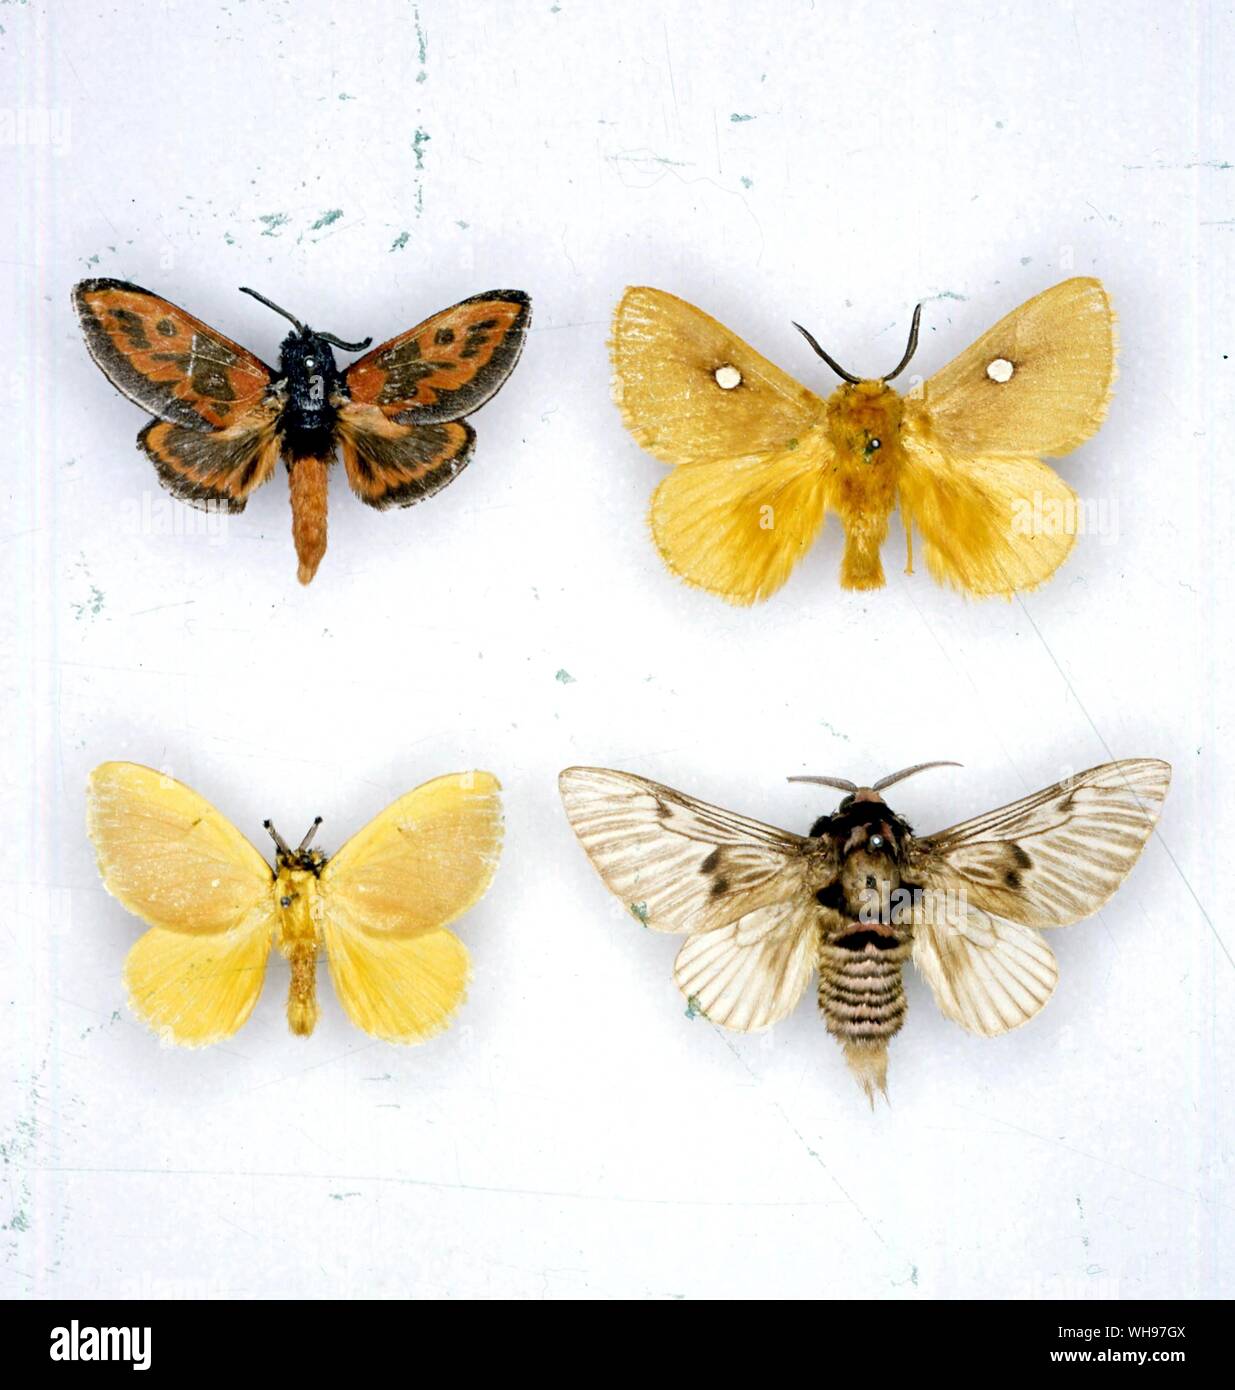 Schmetterlinge und Motten - zu Recht - Trosia bicolor Links, Chrysopoloma Imilis, Dalcera abrasa, Megalopyge lanata, Zygaena occitanica Stockfoto